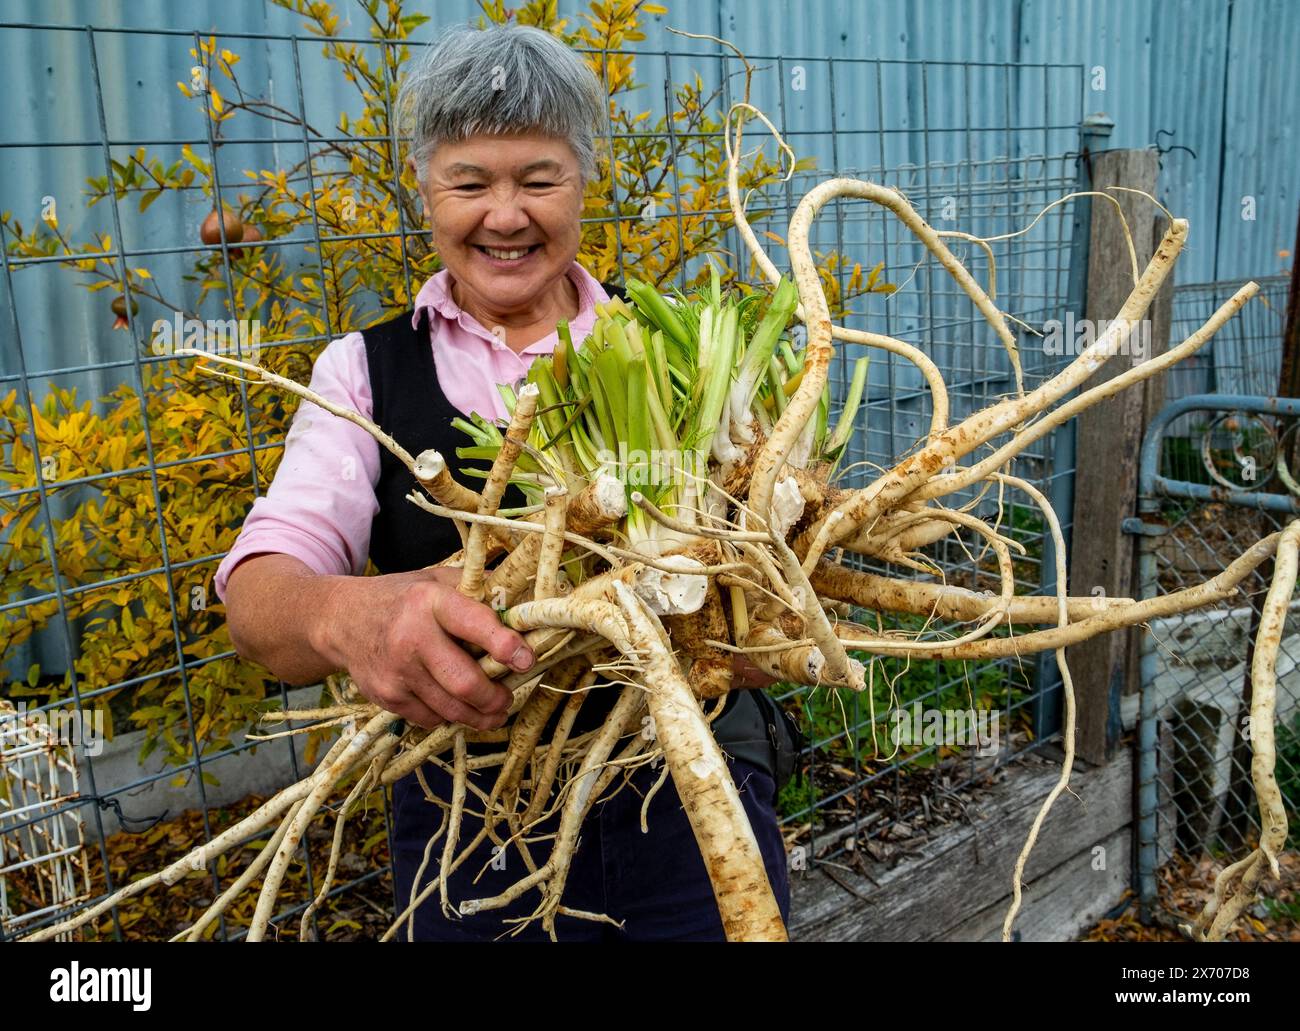 Gardener holding a large horseradish plant root harvested from her garden Stock Photo